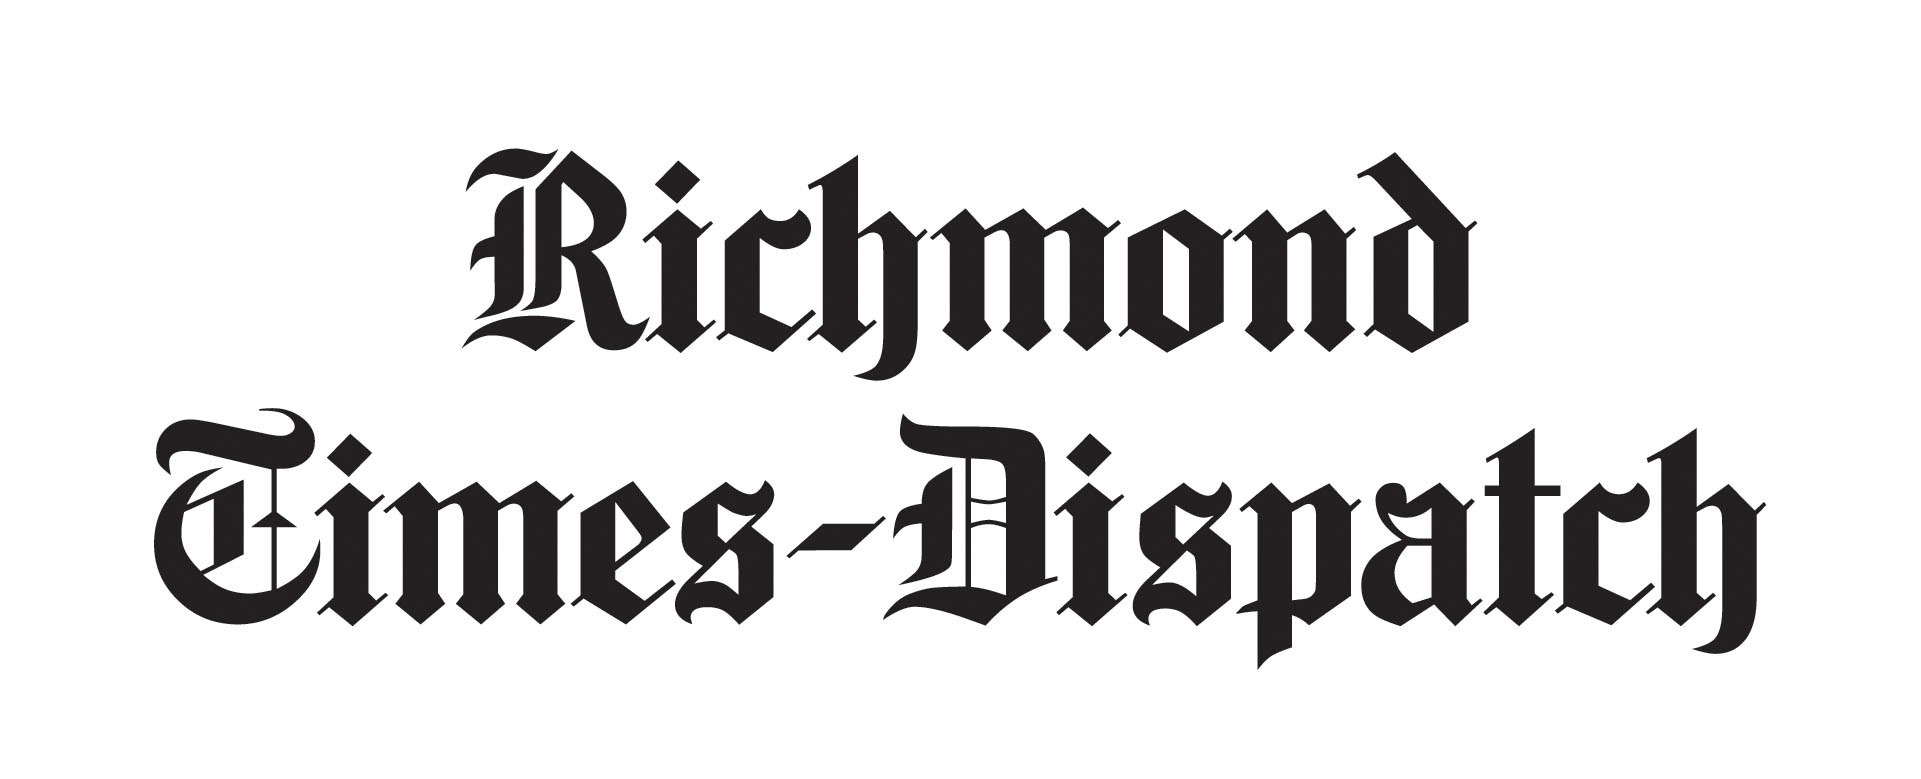 Richmond Times Dispatch Lewis Ginter Botanical Garden